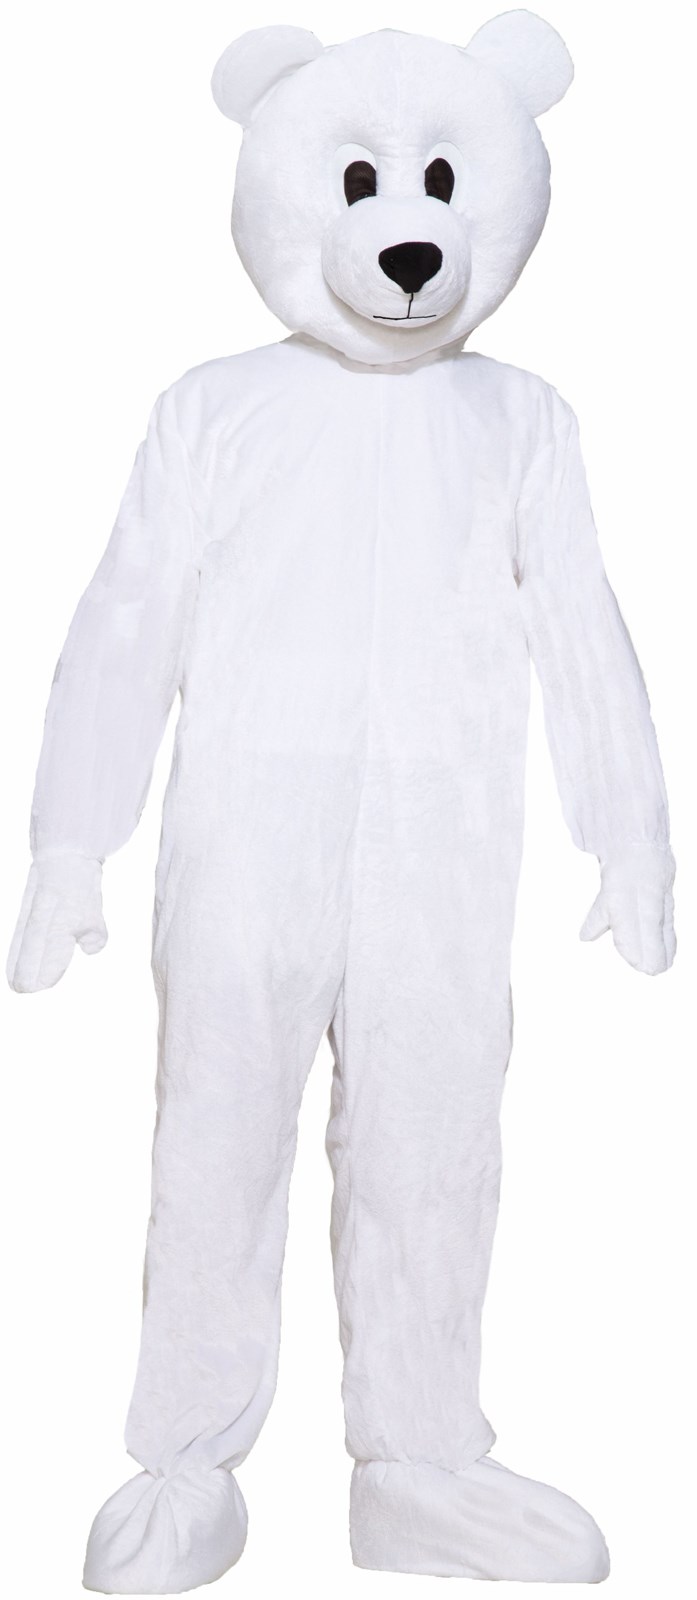 Polar Bear Plush Economy Mascot Adult Costume